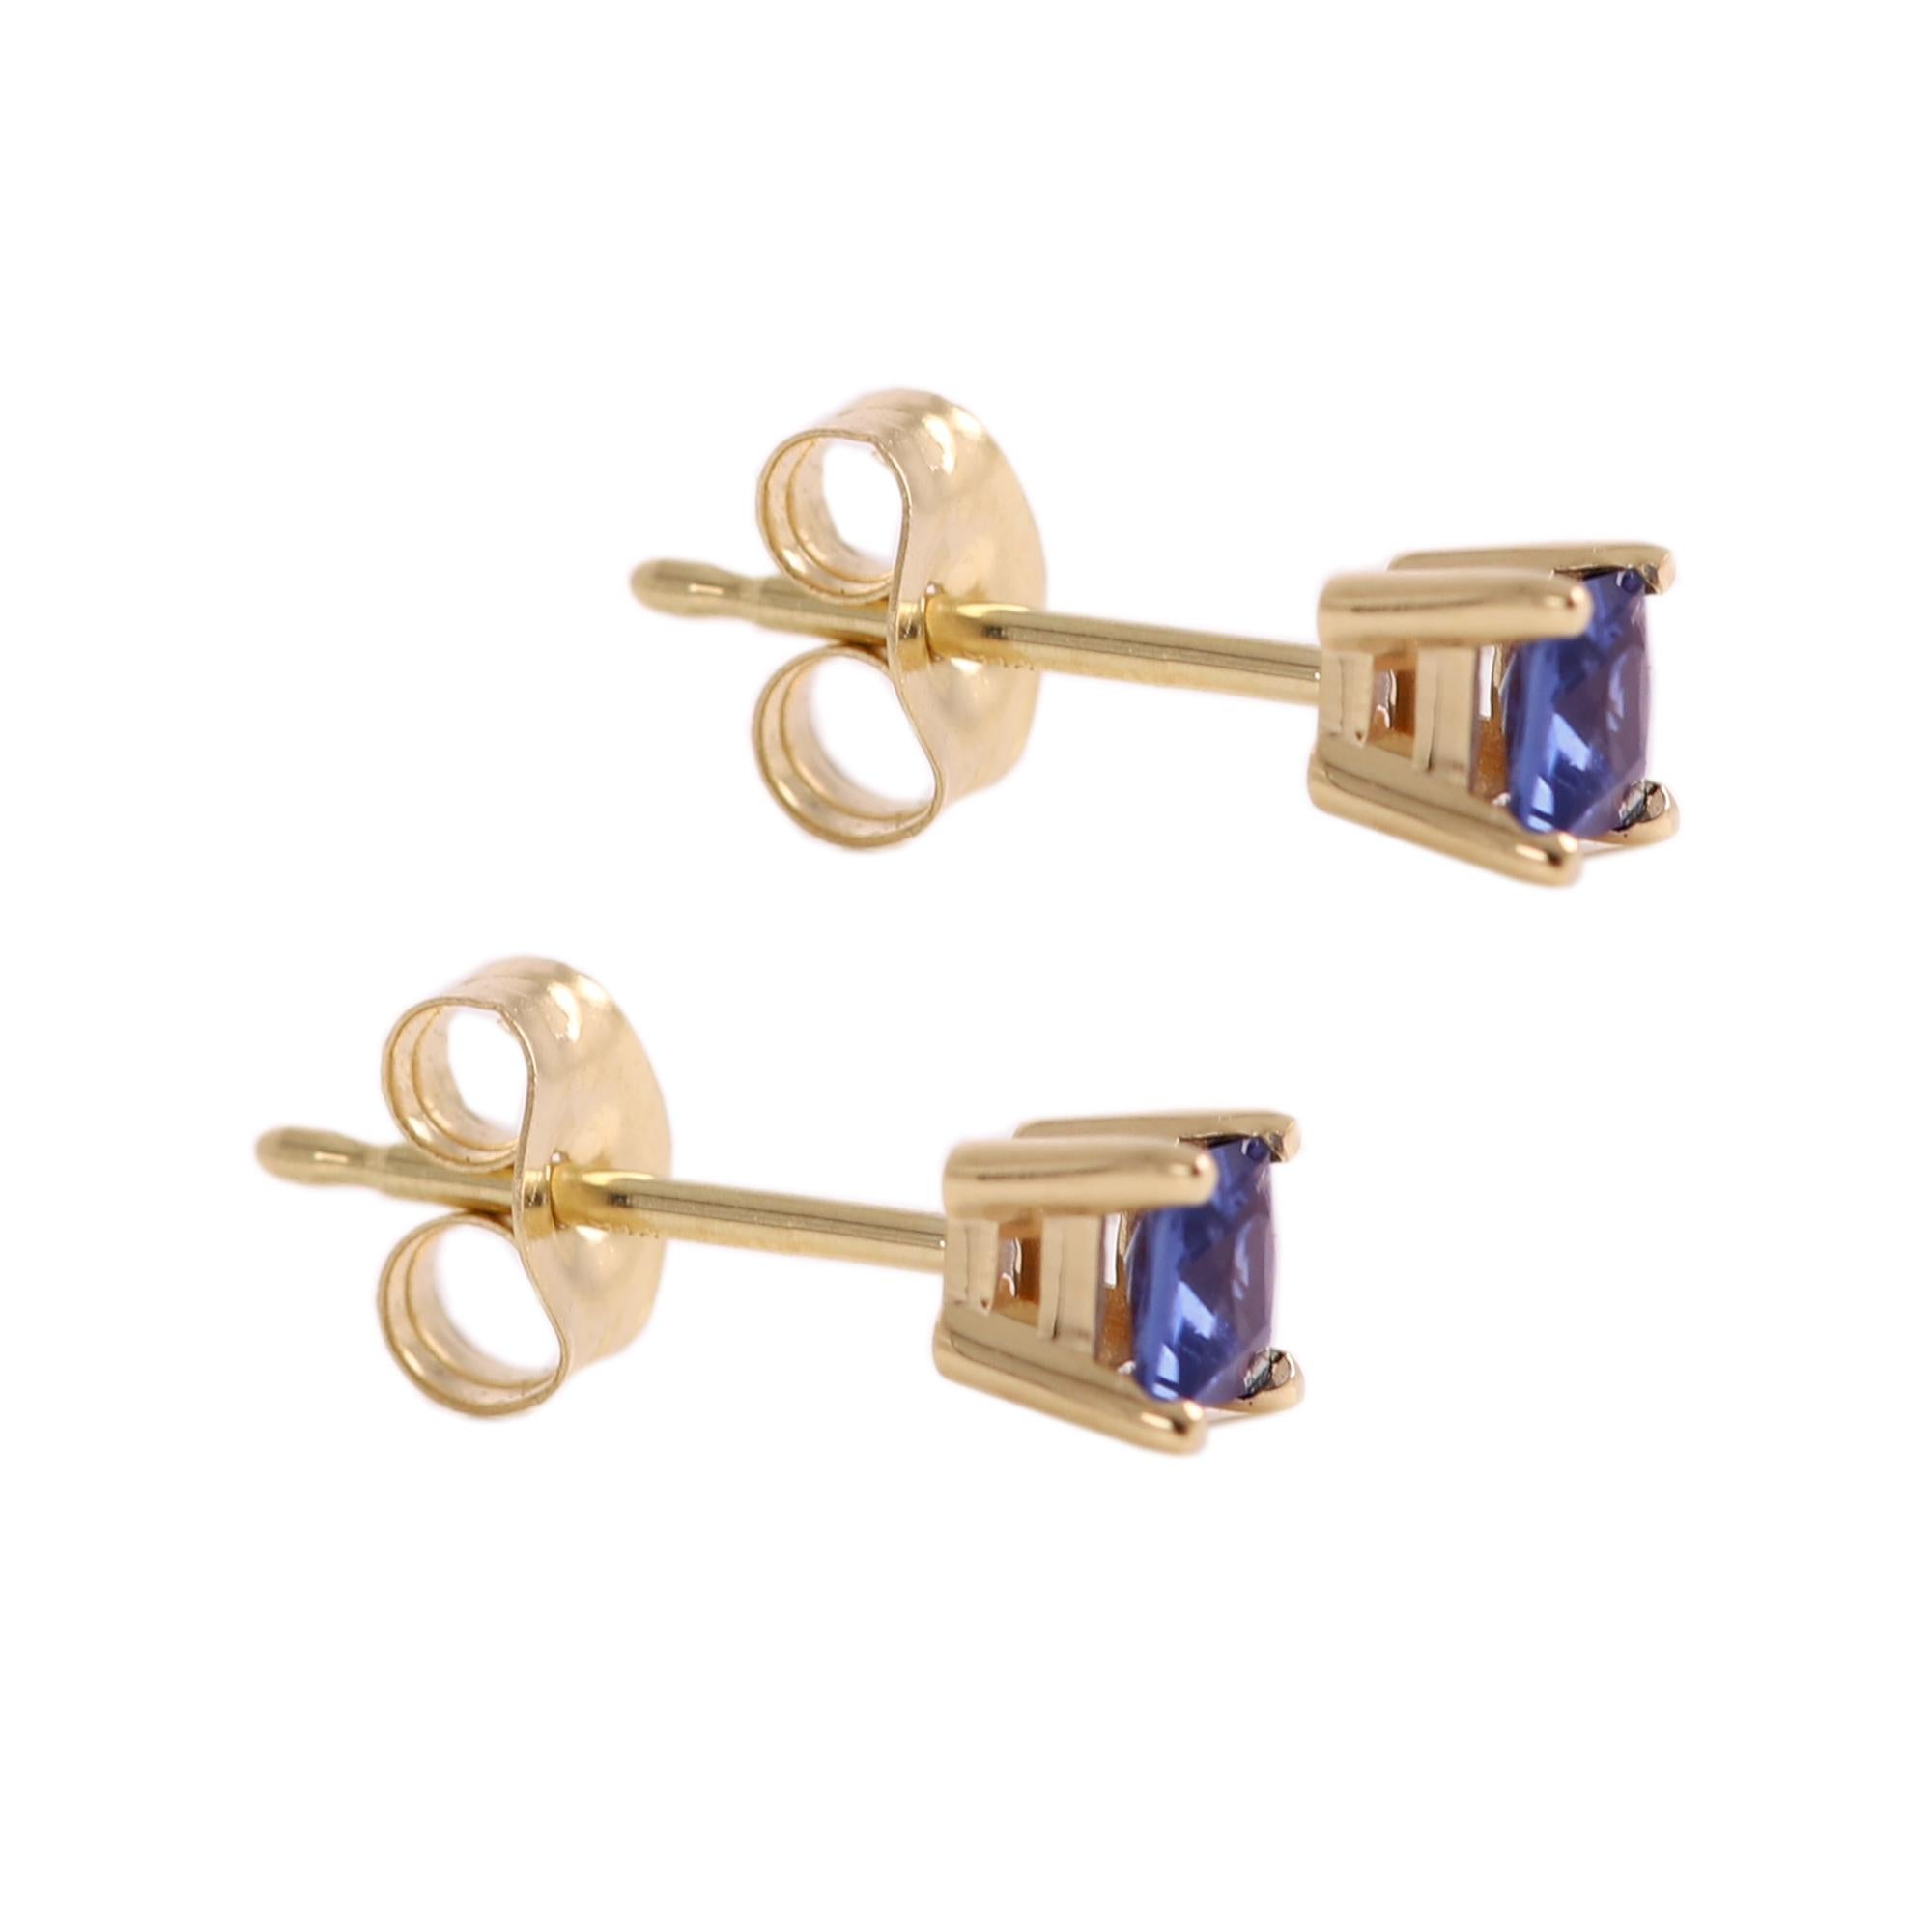 Square Cut Blue Sapphire Earring Studs Mini Cute Size 14 Karat Yellow Gold, Natural Blue